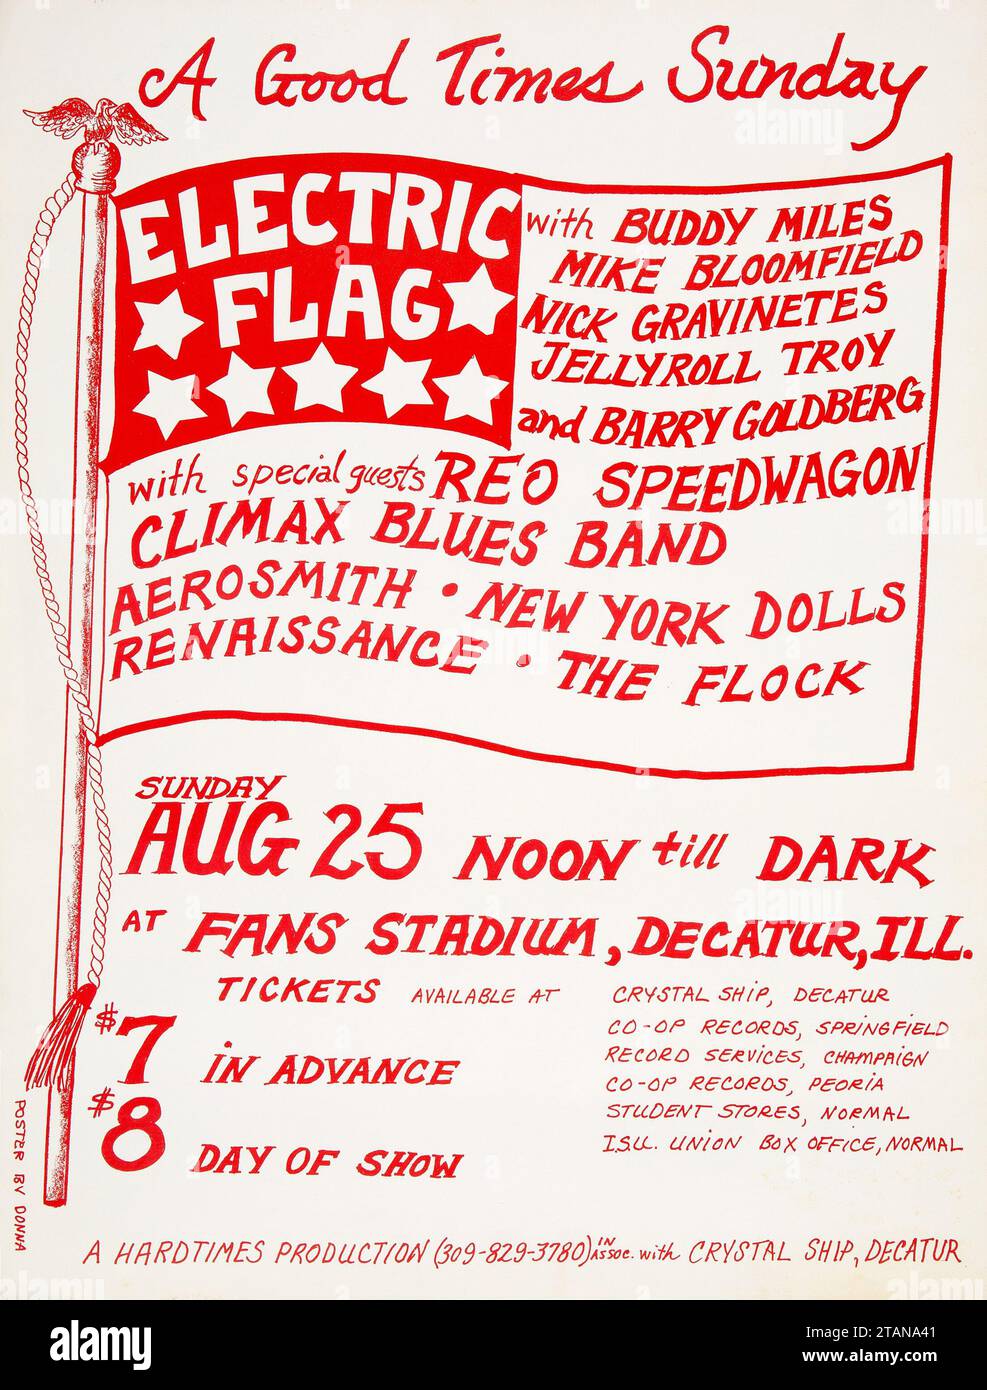 Electric Flag - Aerosmith, Buddy Miles, Mike Bloomfield, Reo Speedwagon, Climax Blues Band, New York Dolls ecc. 1974 Fans Stadium, Decatur, Illinois - poster dei concerti rock d'epoca Foto Stock